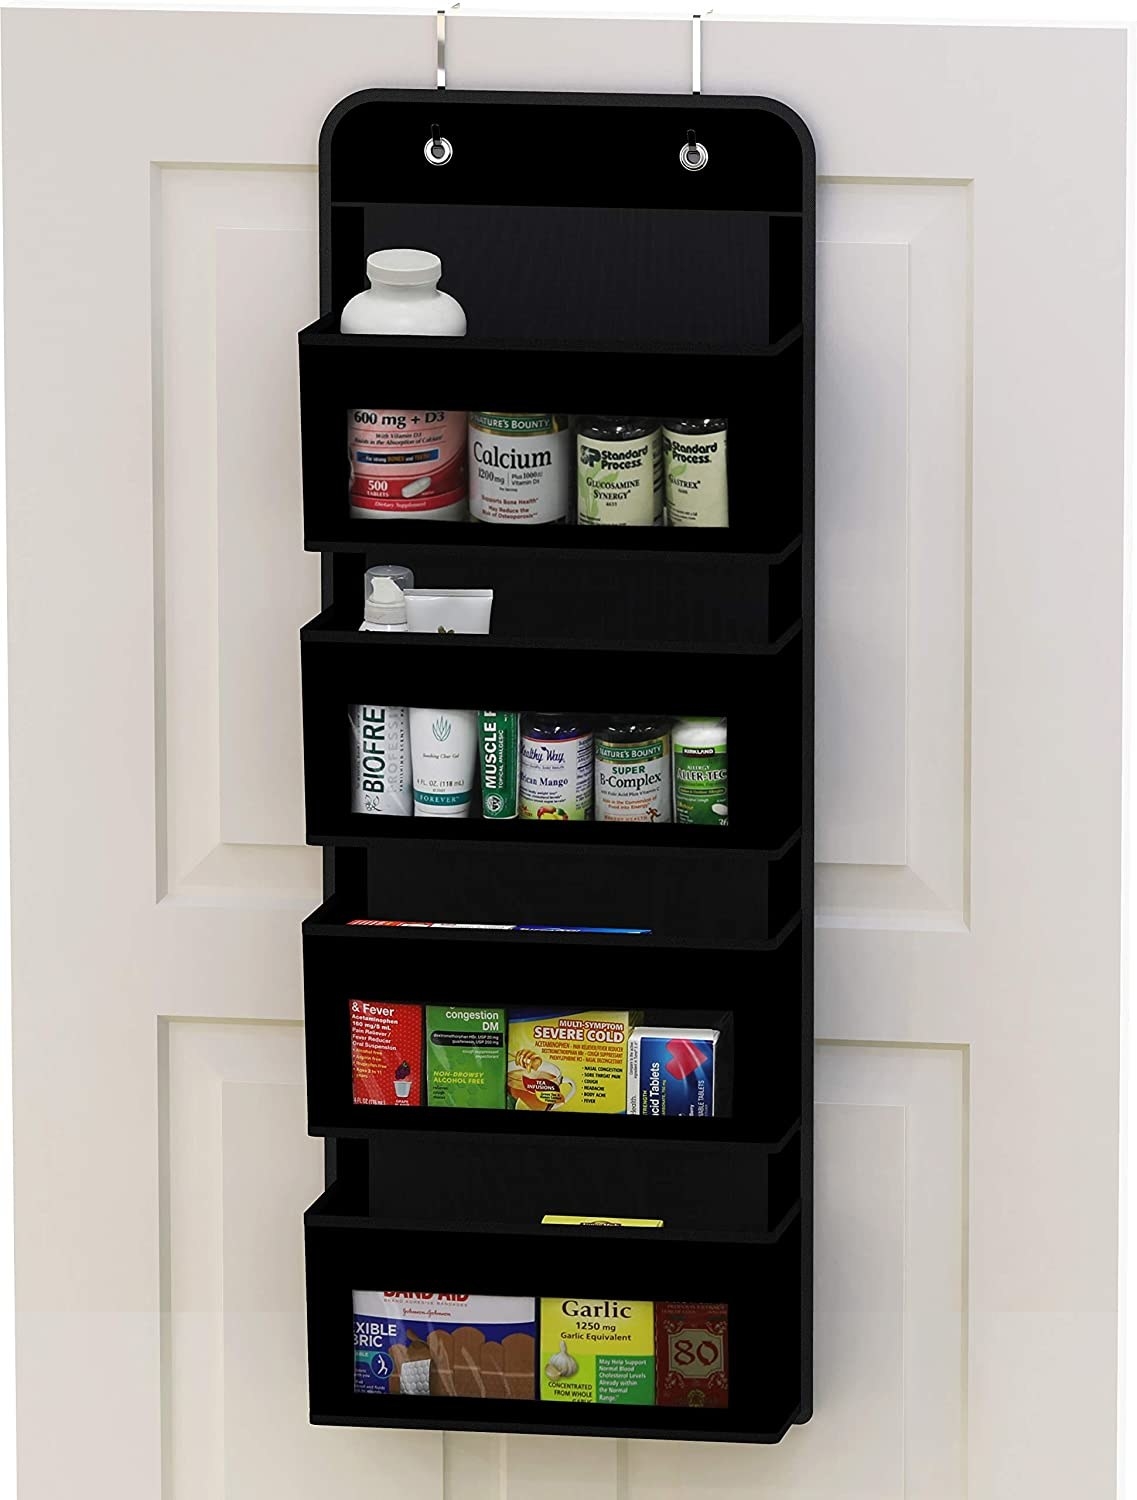 A door-hanging organizing shelf 